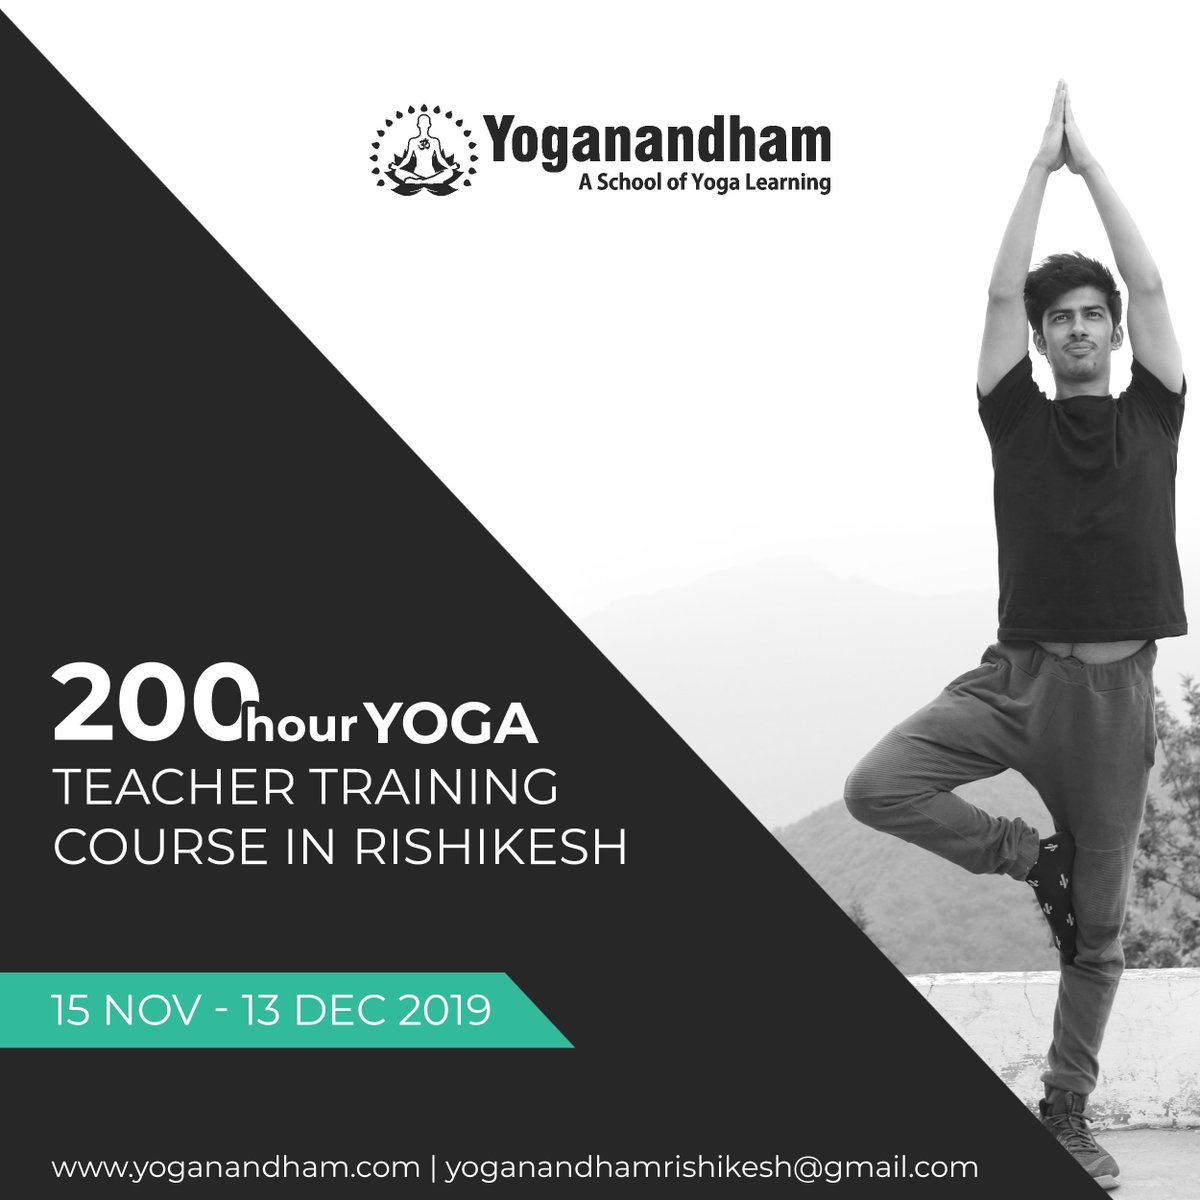 Courses Starting From 15th November. Book Now yoganandham.com/registration.p…

visit yoganandham.com/200-hour-yoga-…
website: yoganandham.com
#yoganandham #yogainindia #yogateachertraining #yogacourse #100hoursyoga #200hoursyoga #beginneryoga #advancedyoga #yogaretreatsinindia